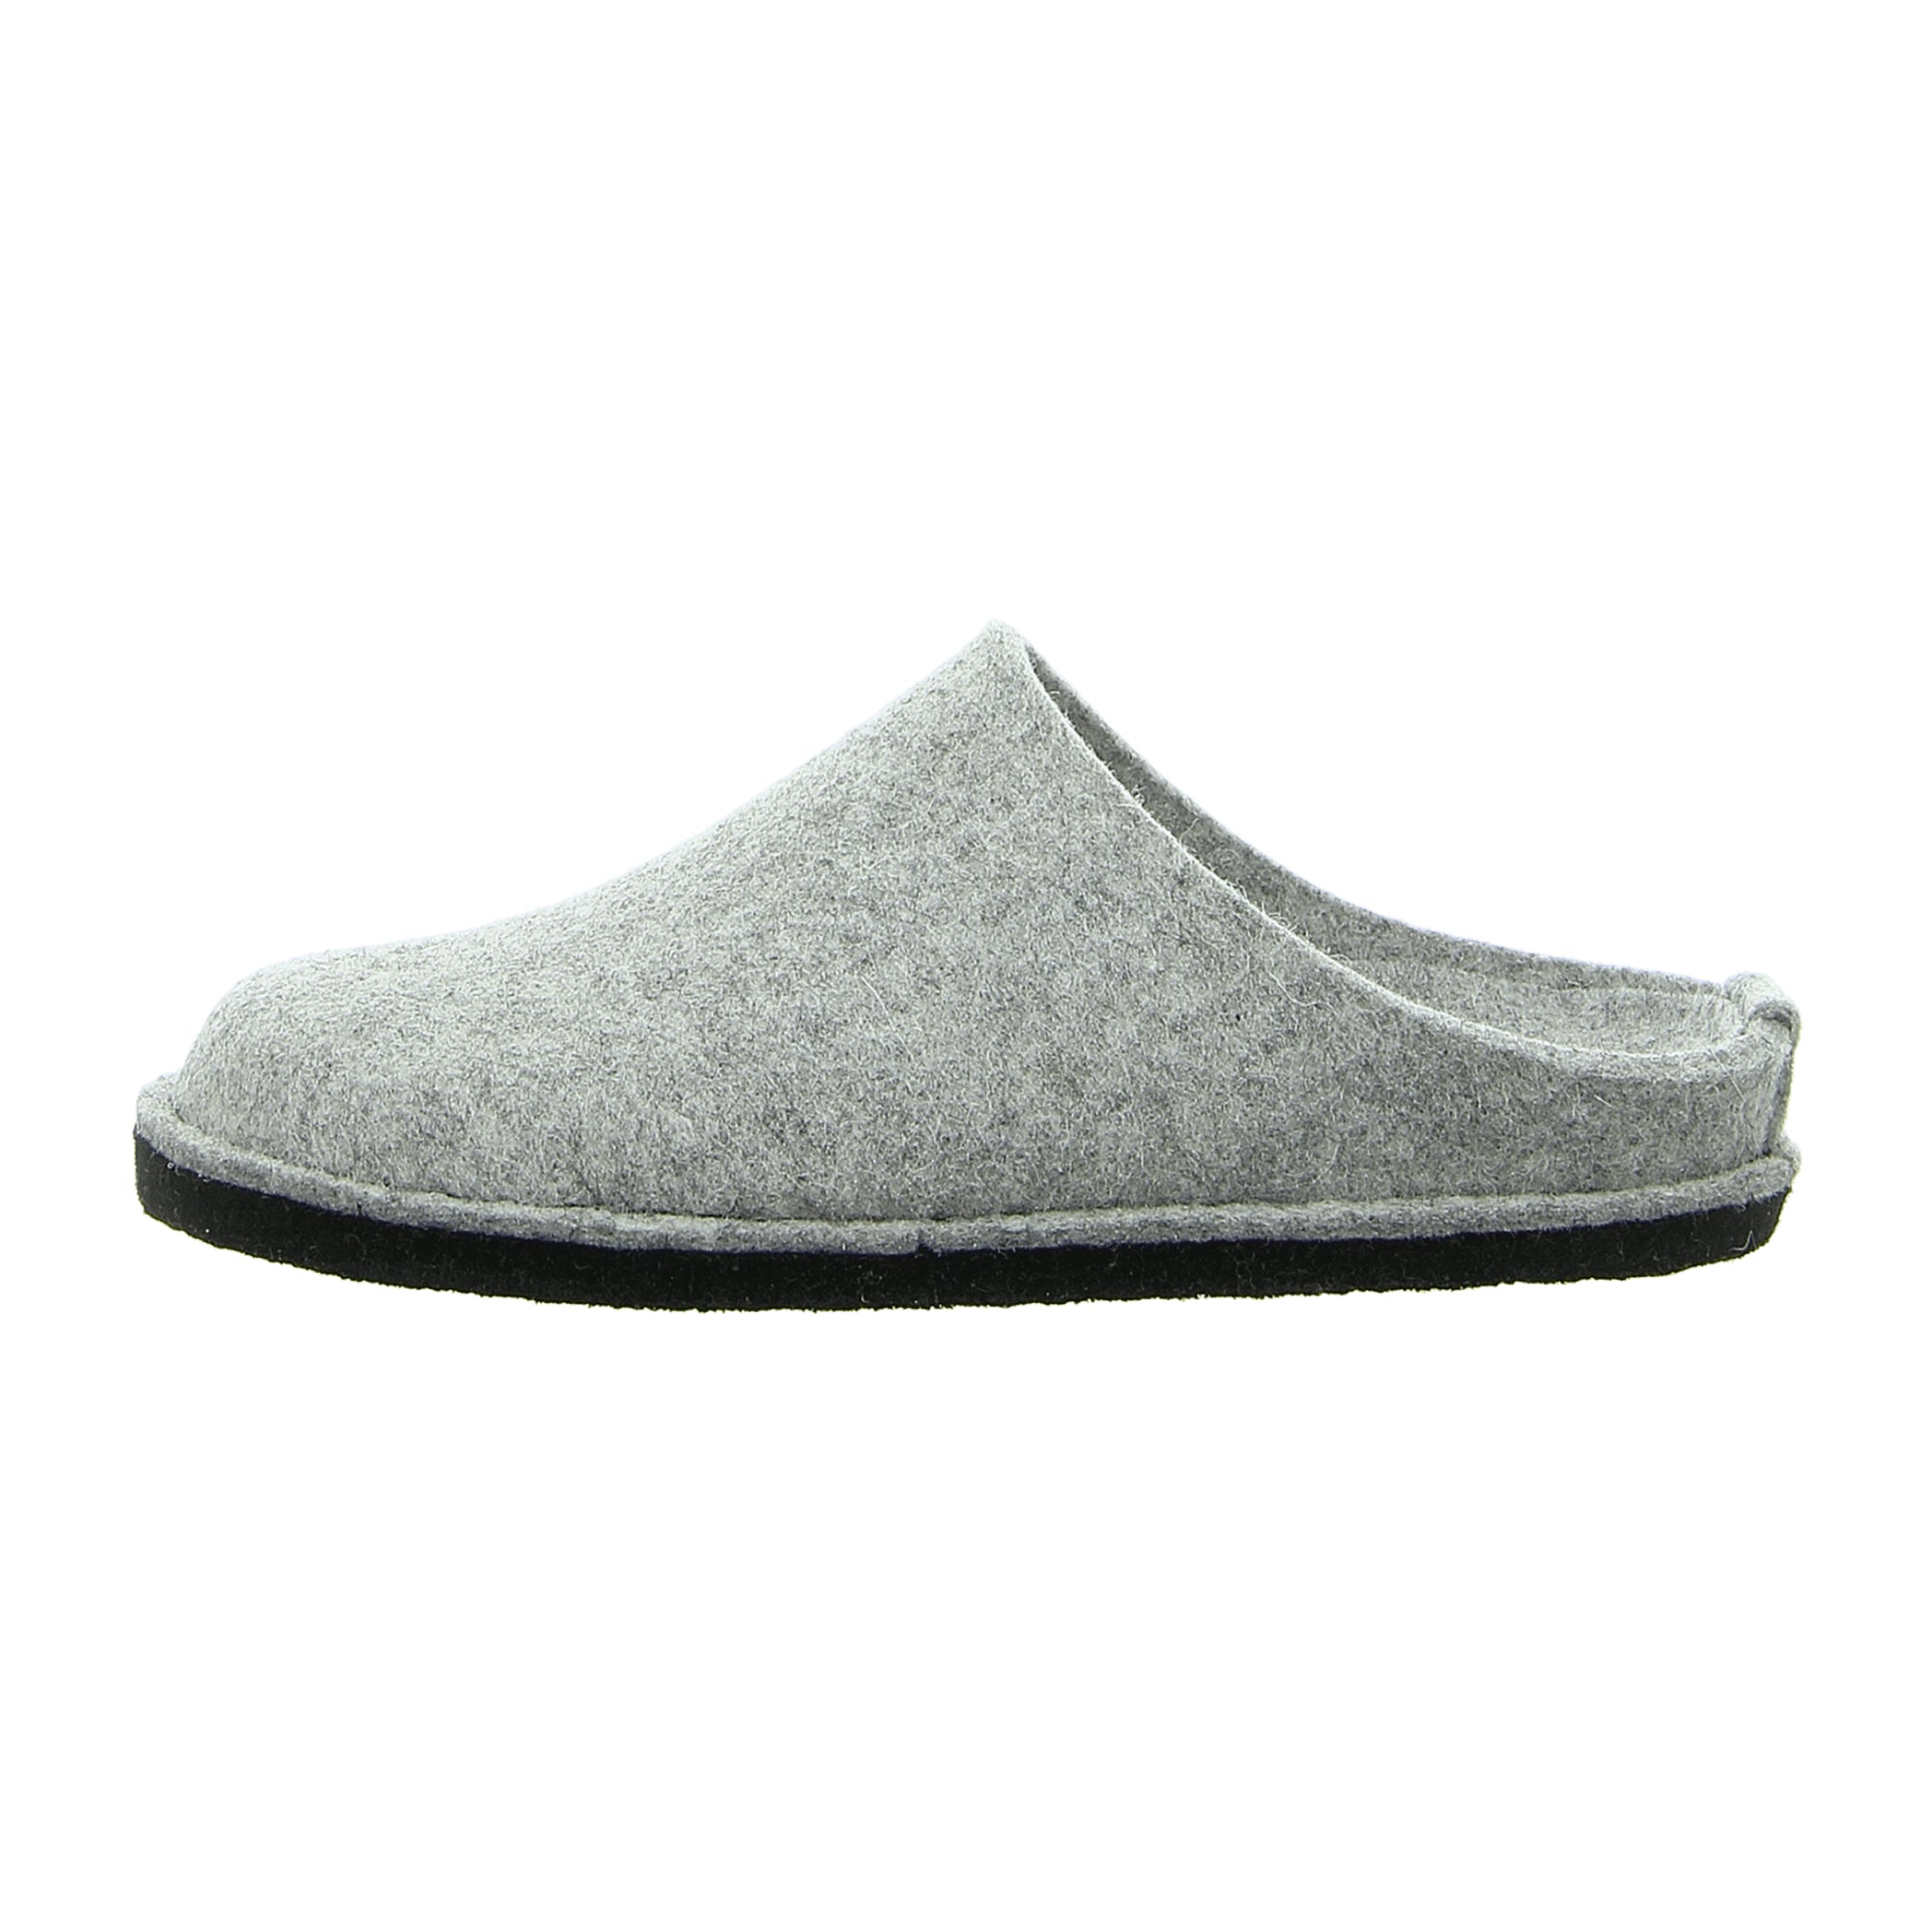 Haflinger Flair Soft Men's Slippers, Grey - Cozy & Stylish Indoor Footwear